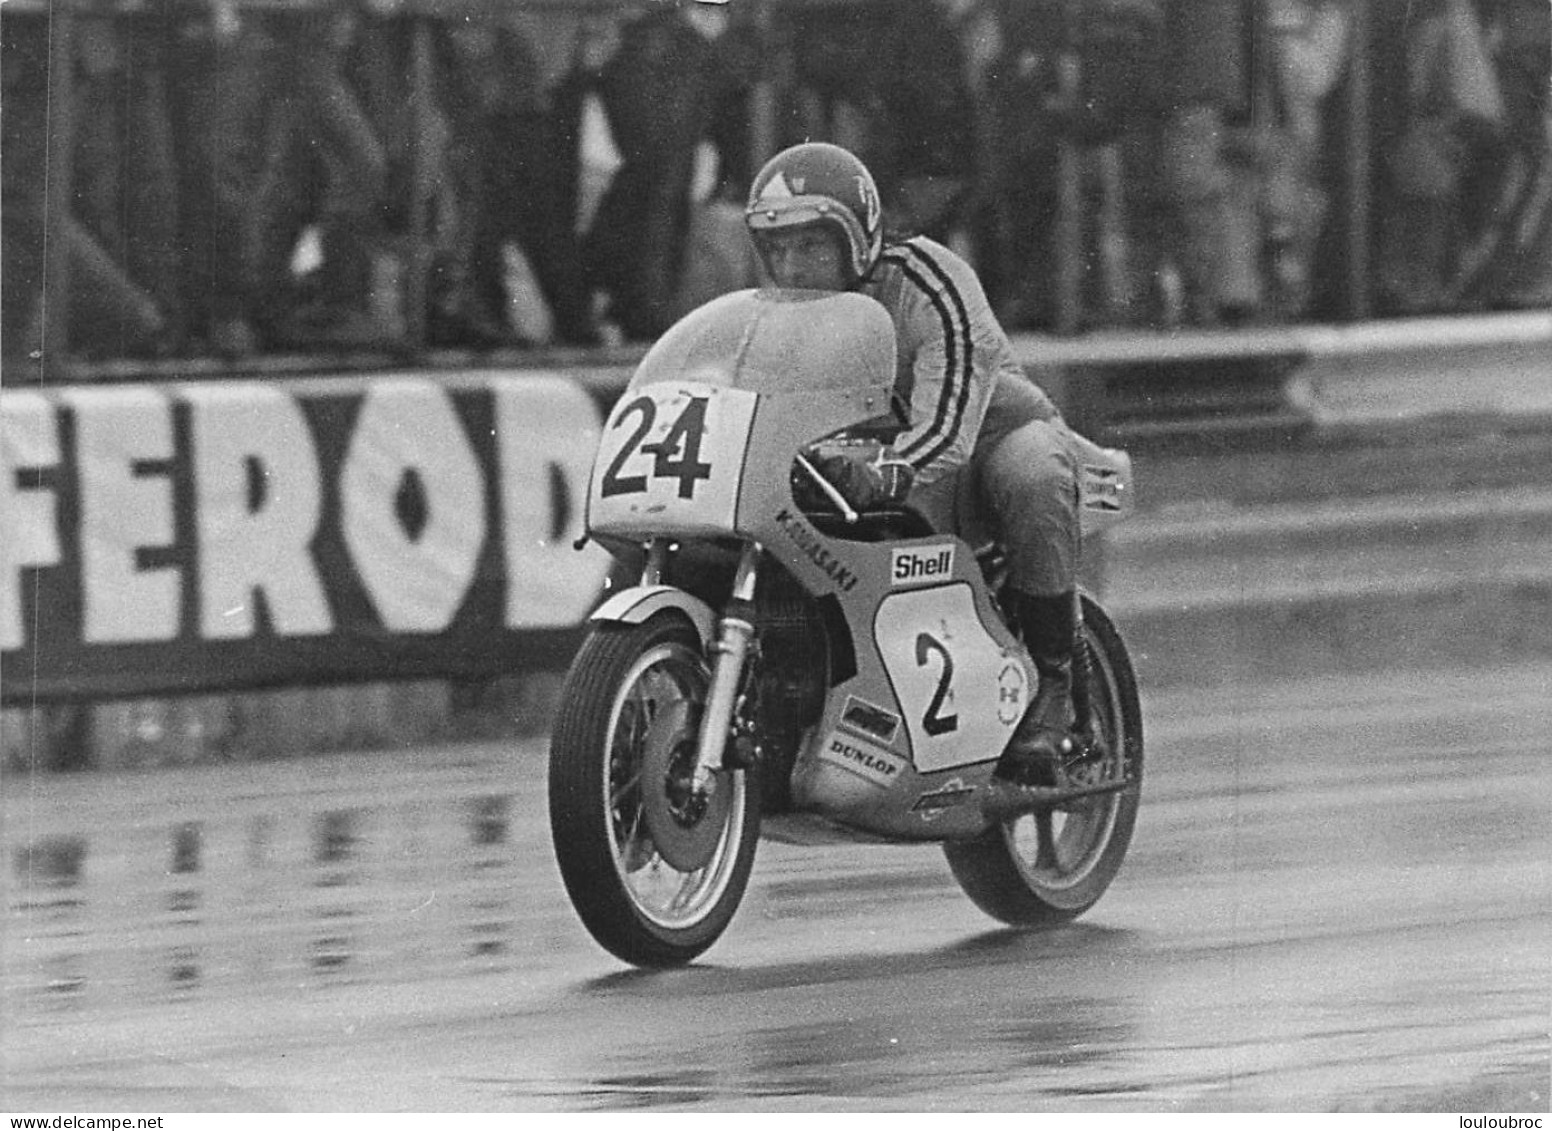 PILOTE  MOTO PERCY TAIT  COURSE ANNEE 1974 KAWASAKI 500CC  RACE OF THE YEAR PHOTO DE PRESSE ORIGINALE 18X13CM R1 - Sports